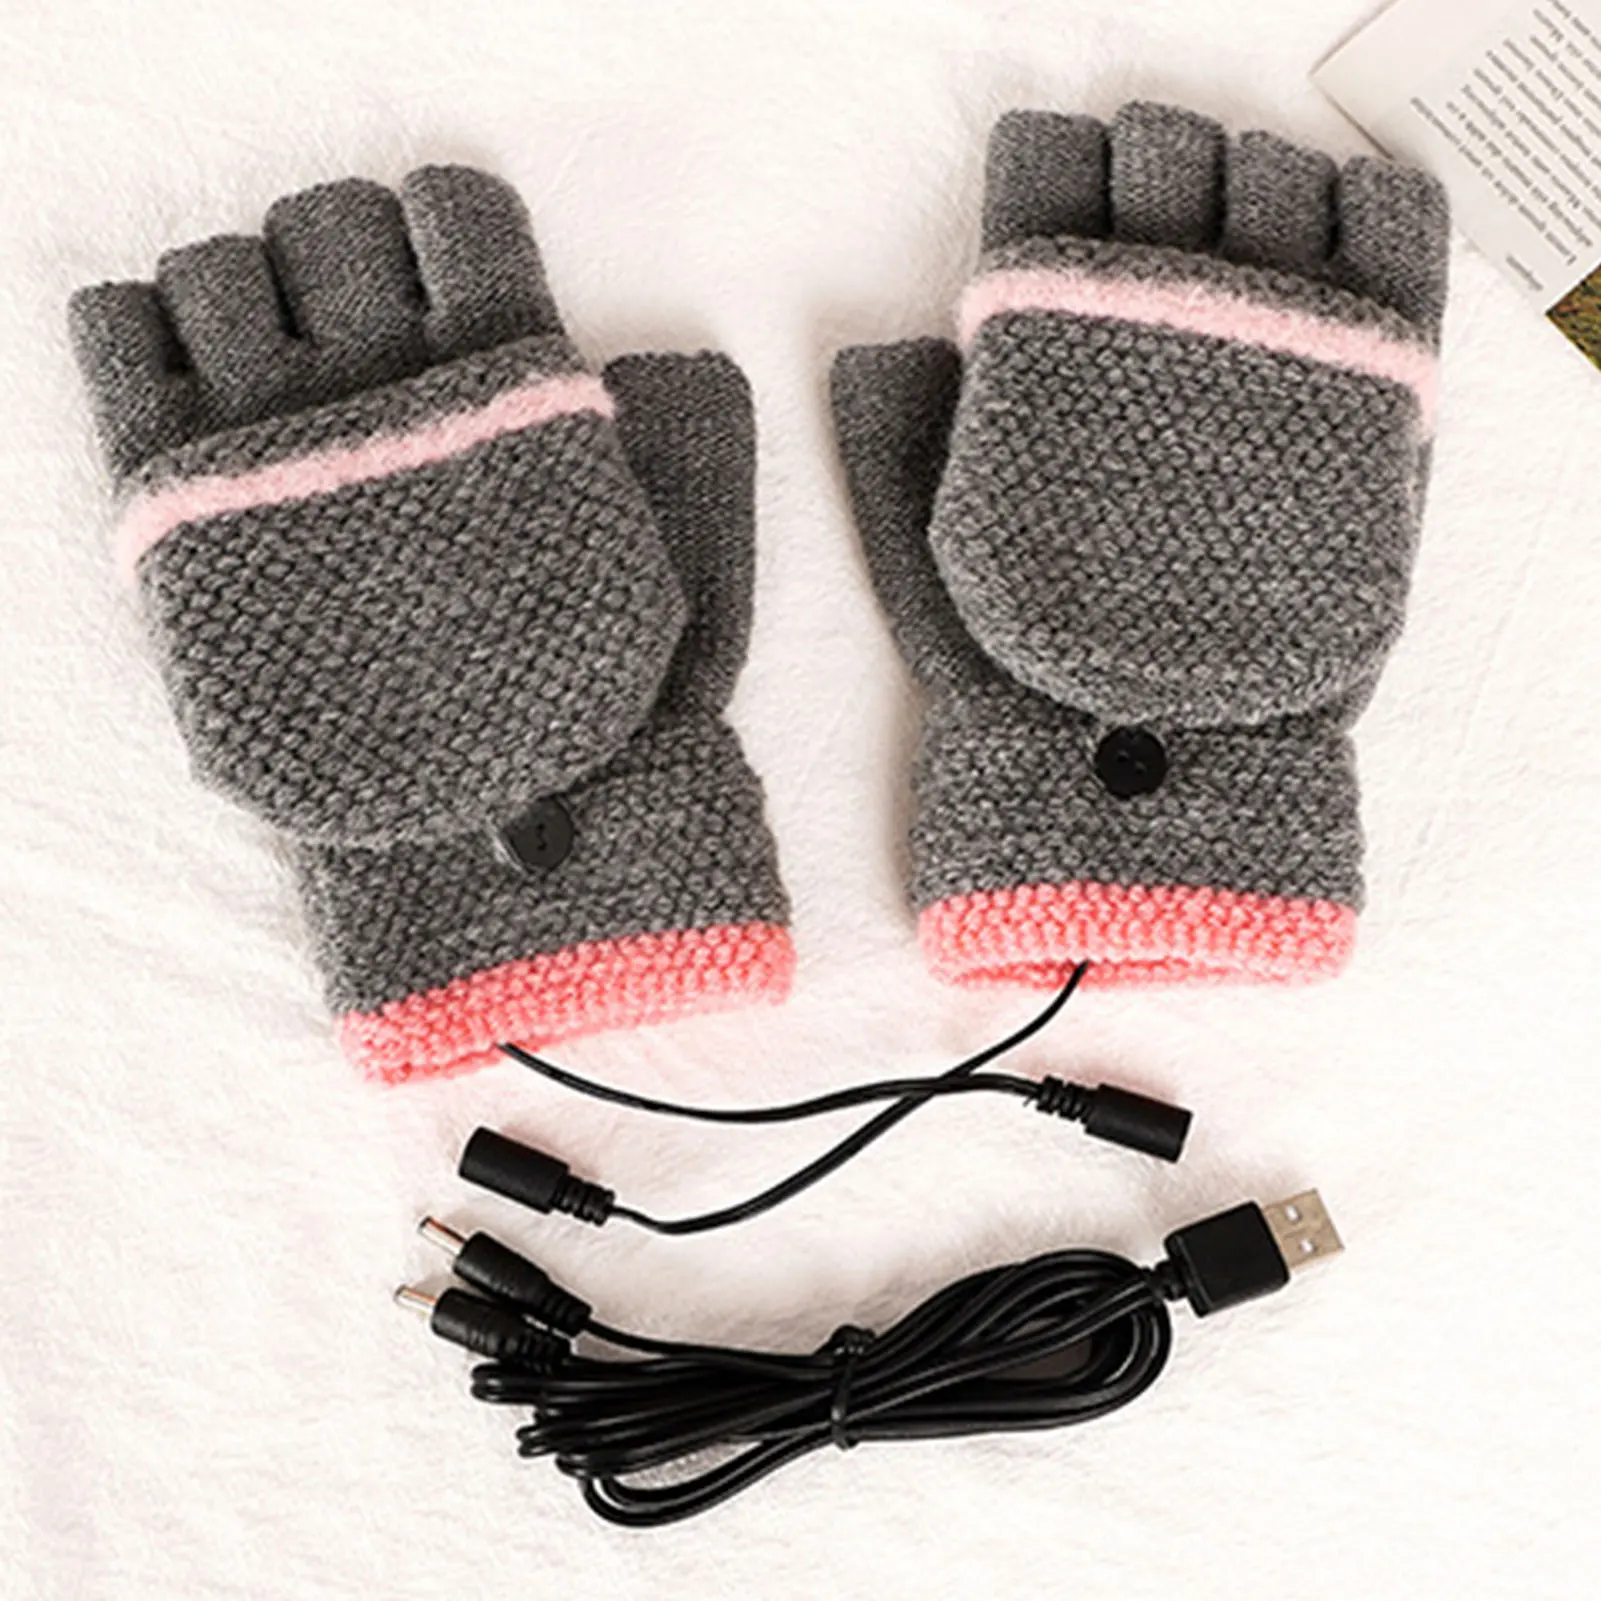 

USB Heating Knitting Hands Warmer USB Charging Half Full Fingers Knitting Gloves for Office Worker School Teacher Newly